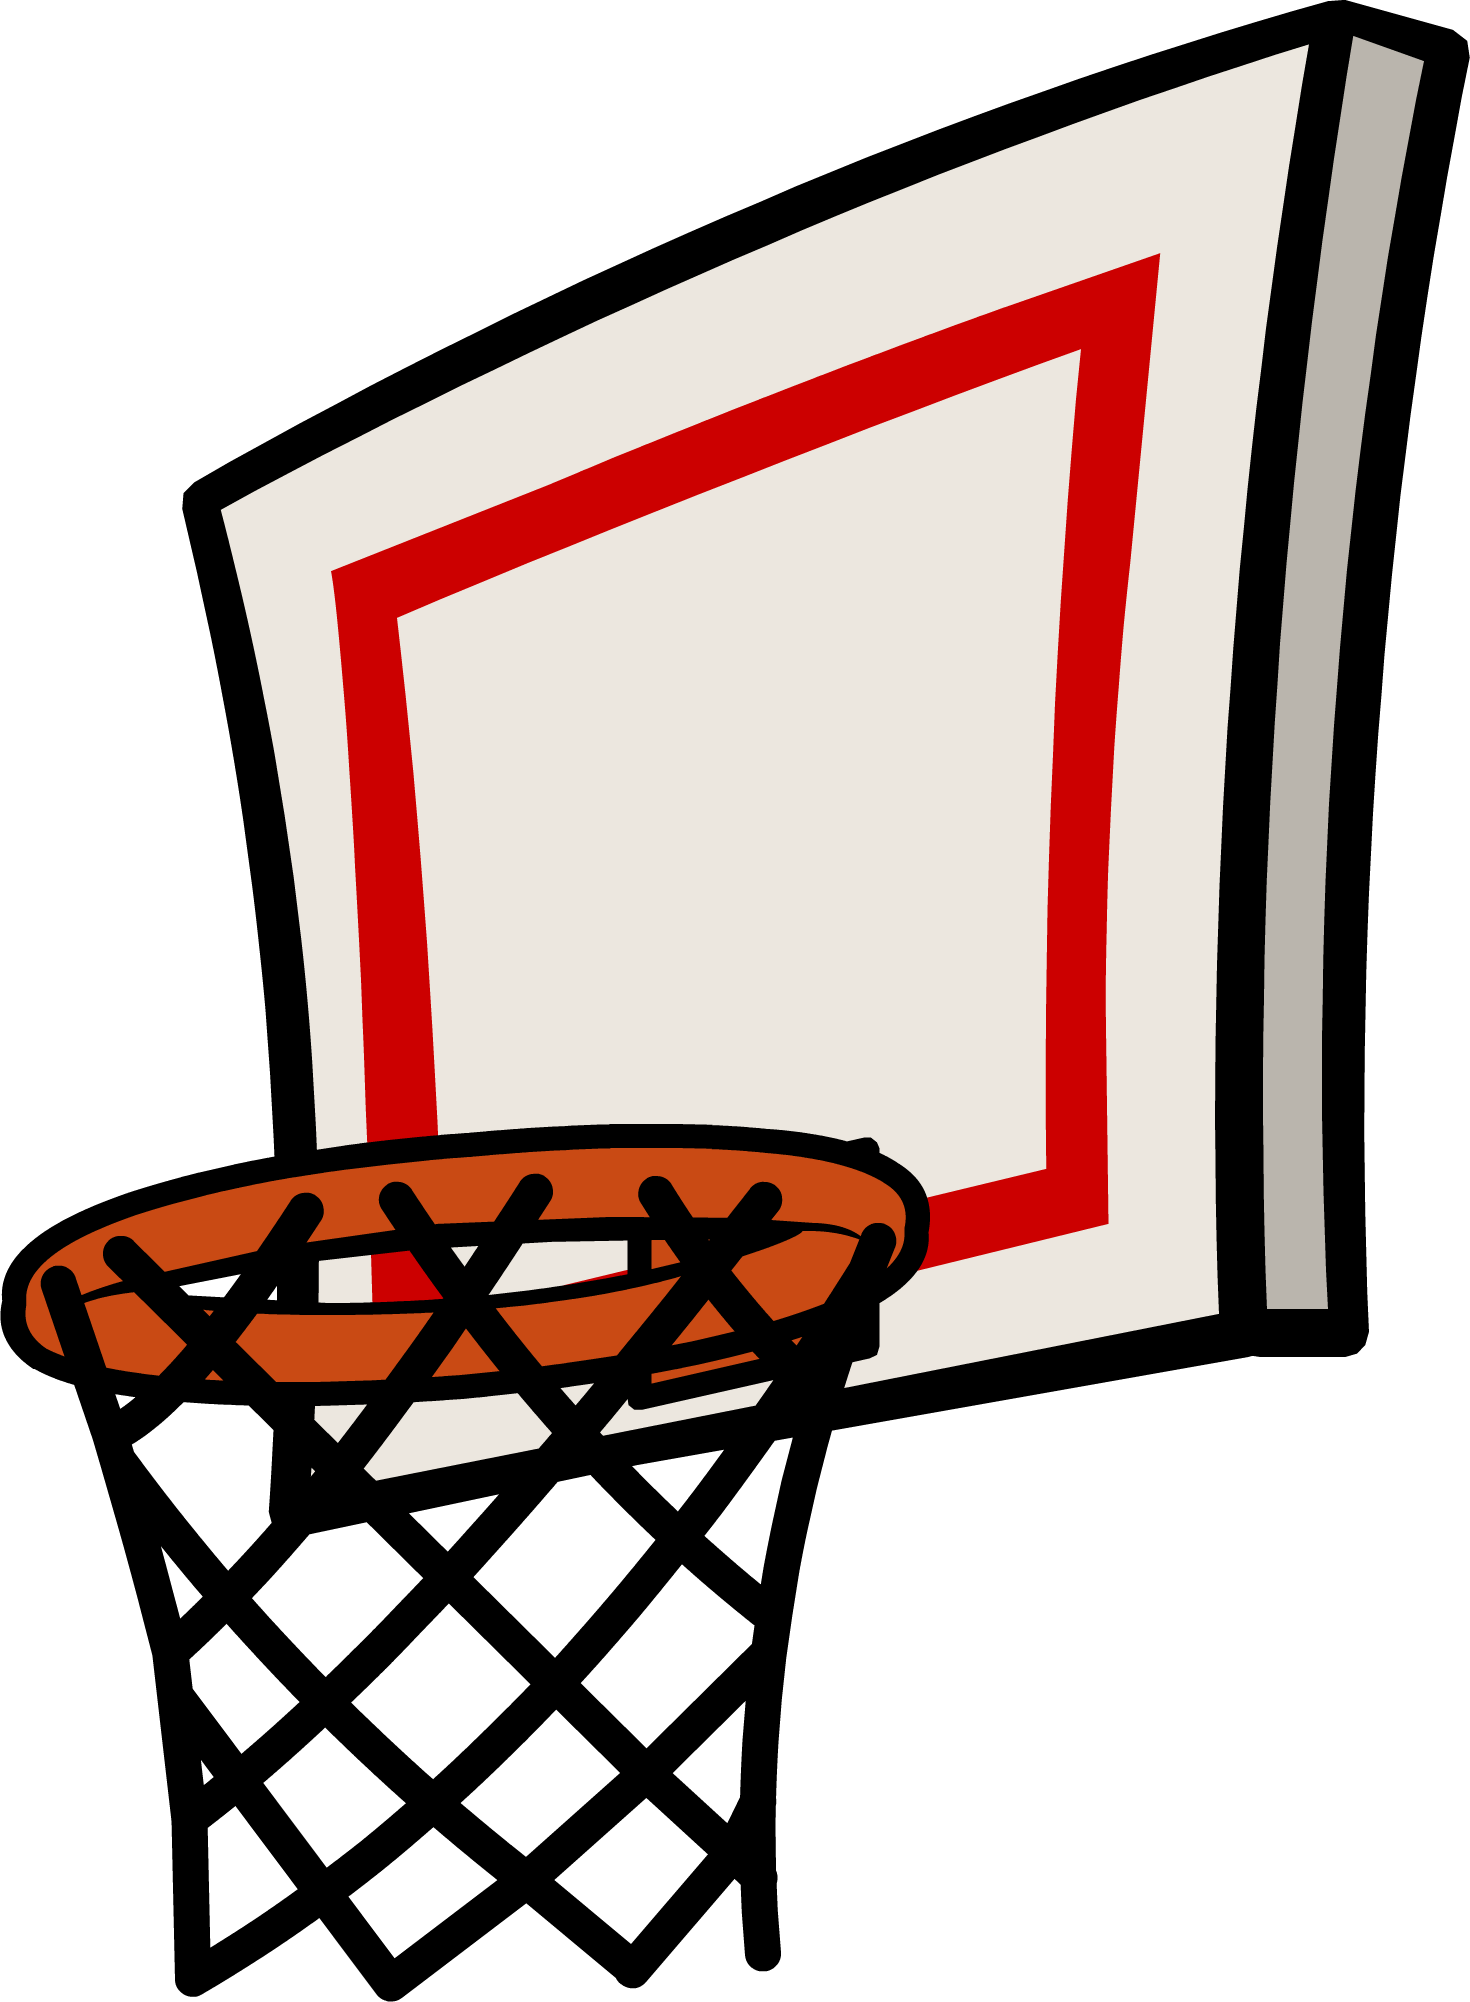 Basketball Hoop Background PNG Image